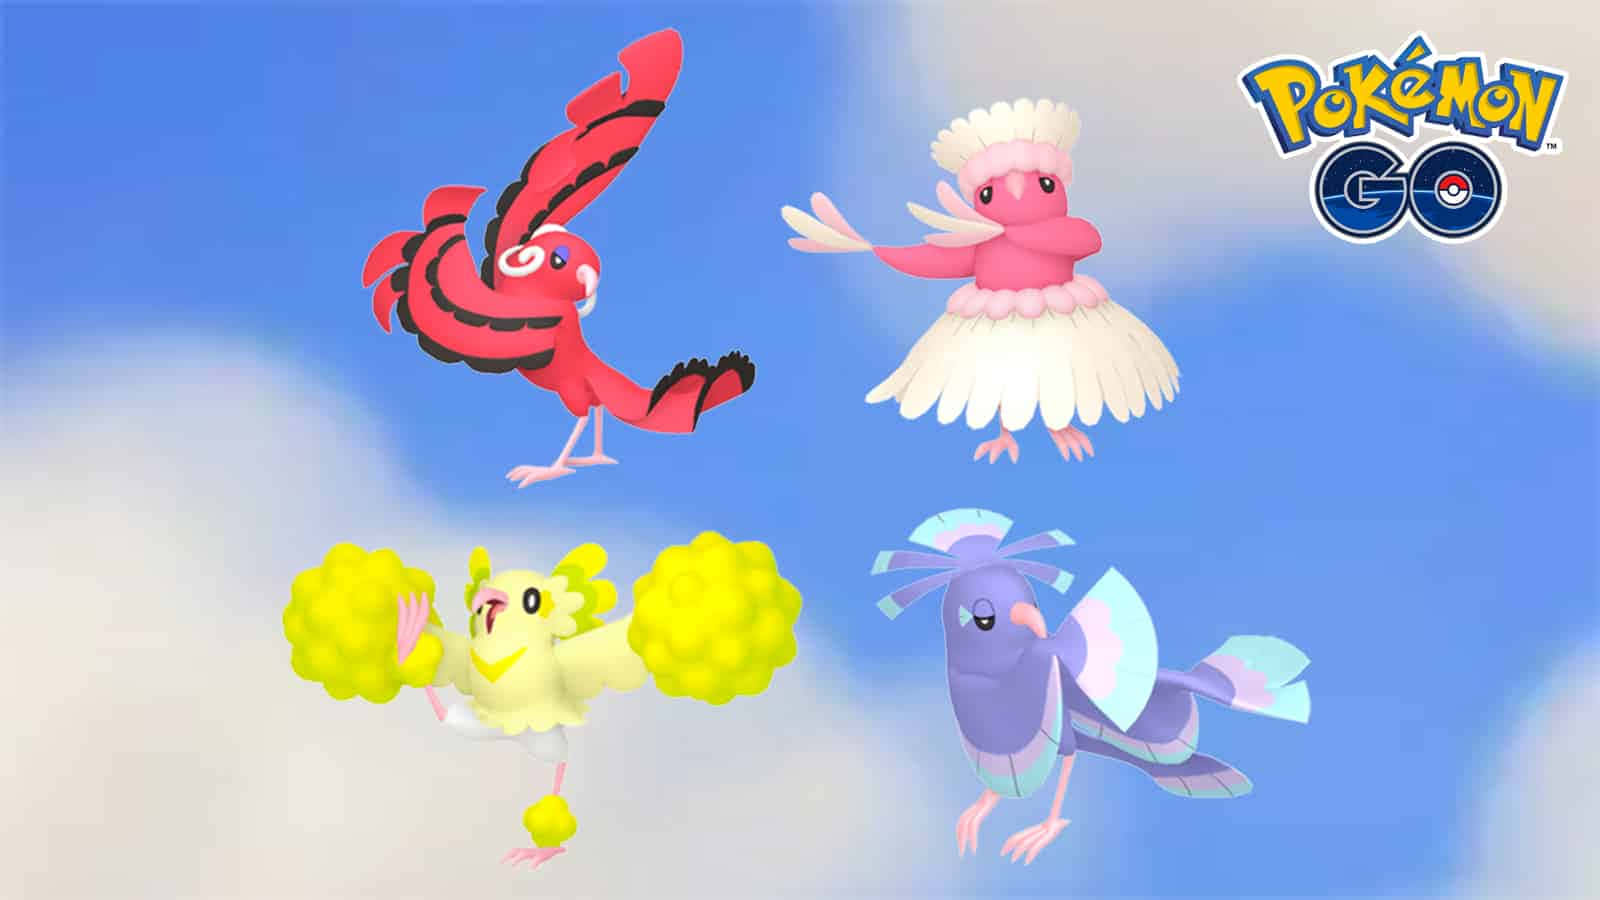 The Energetic Oricorio Dancing with Delight in Pokemon Go Wallpaper